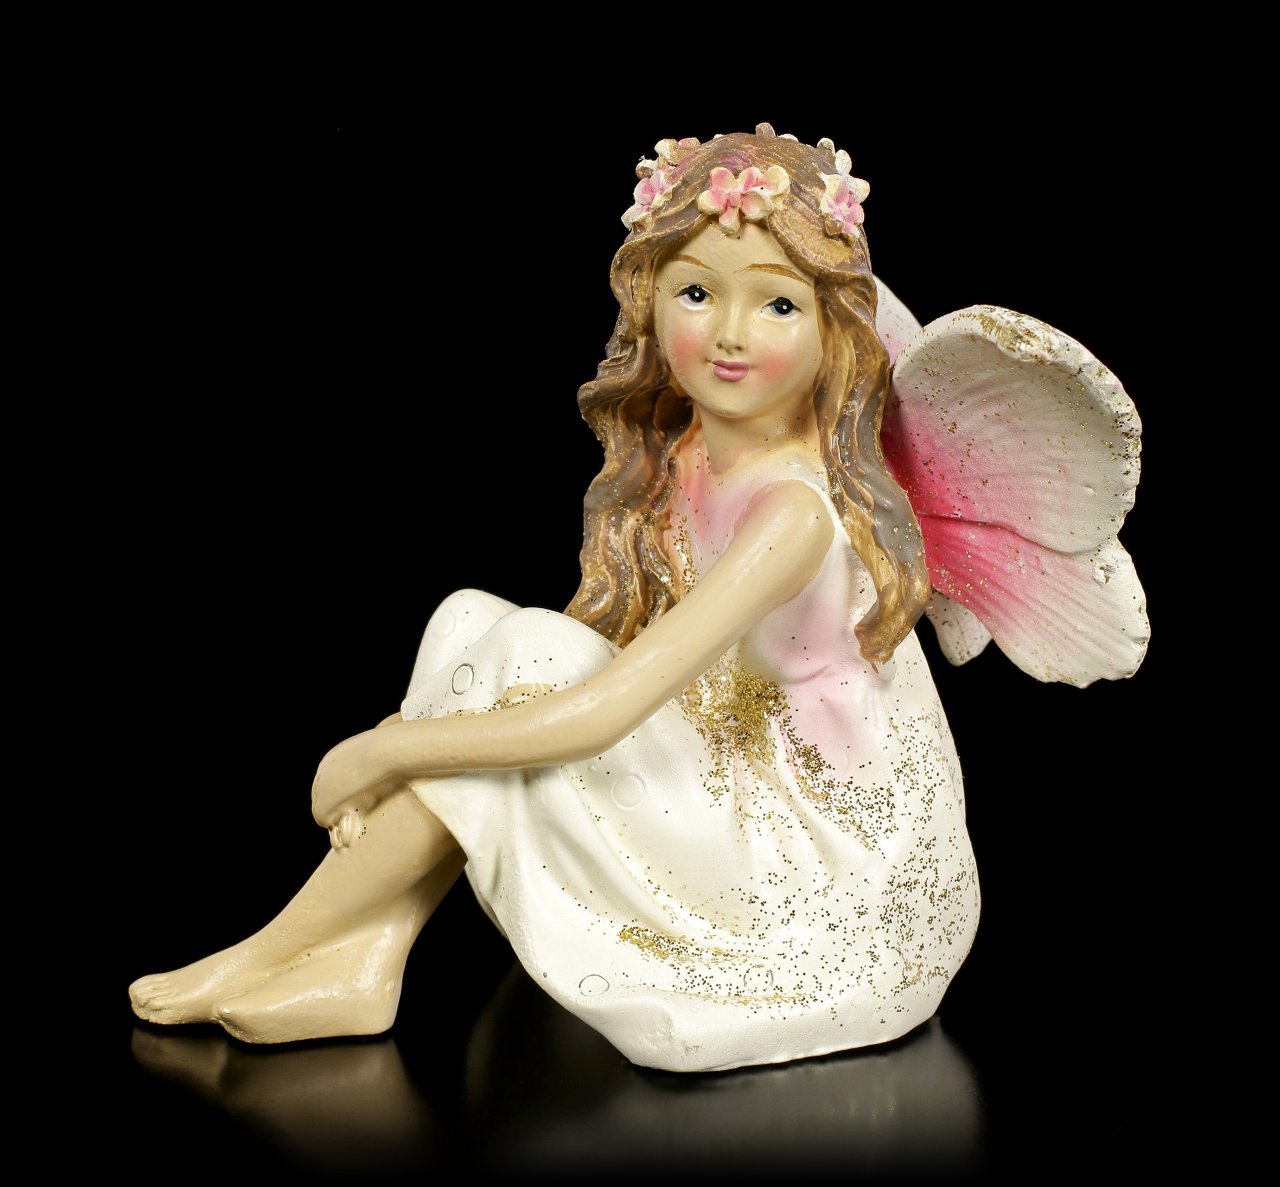 Dream Fairy Figurine sitting